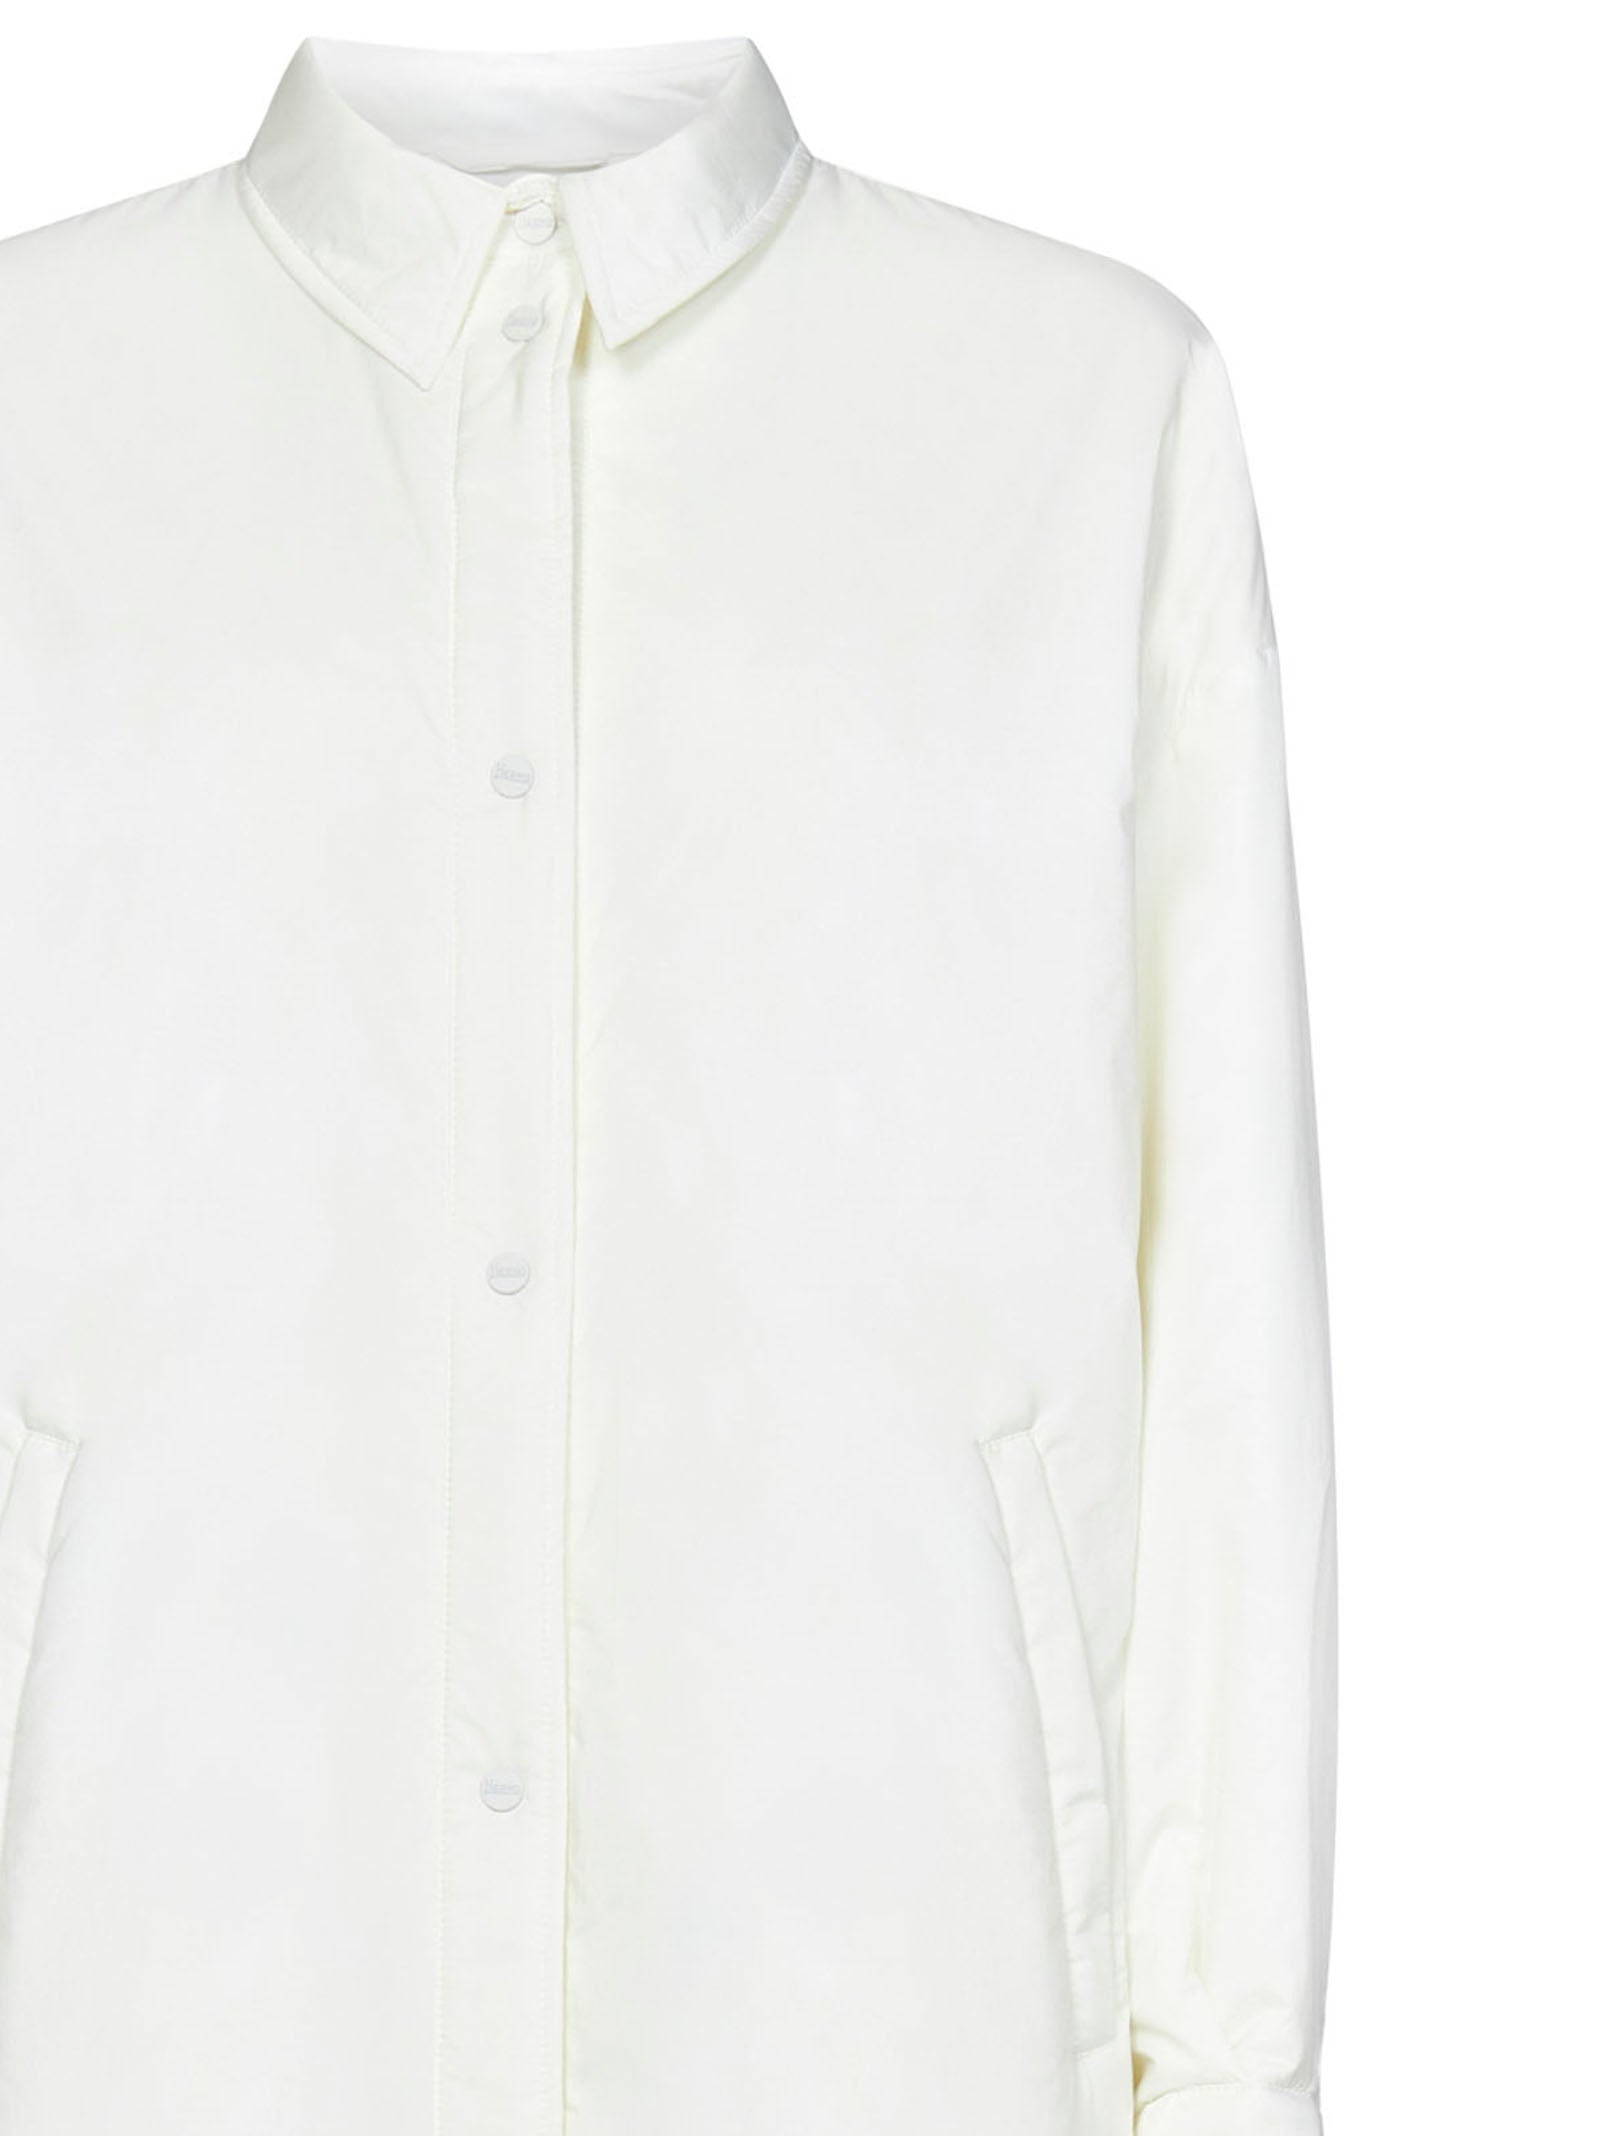 Oversized white shirt in ultralight 20 denier nylon with thin padding. - 3